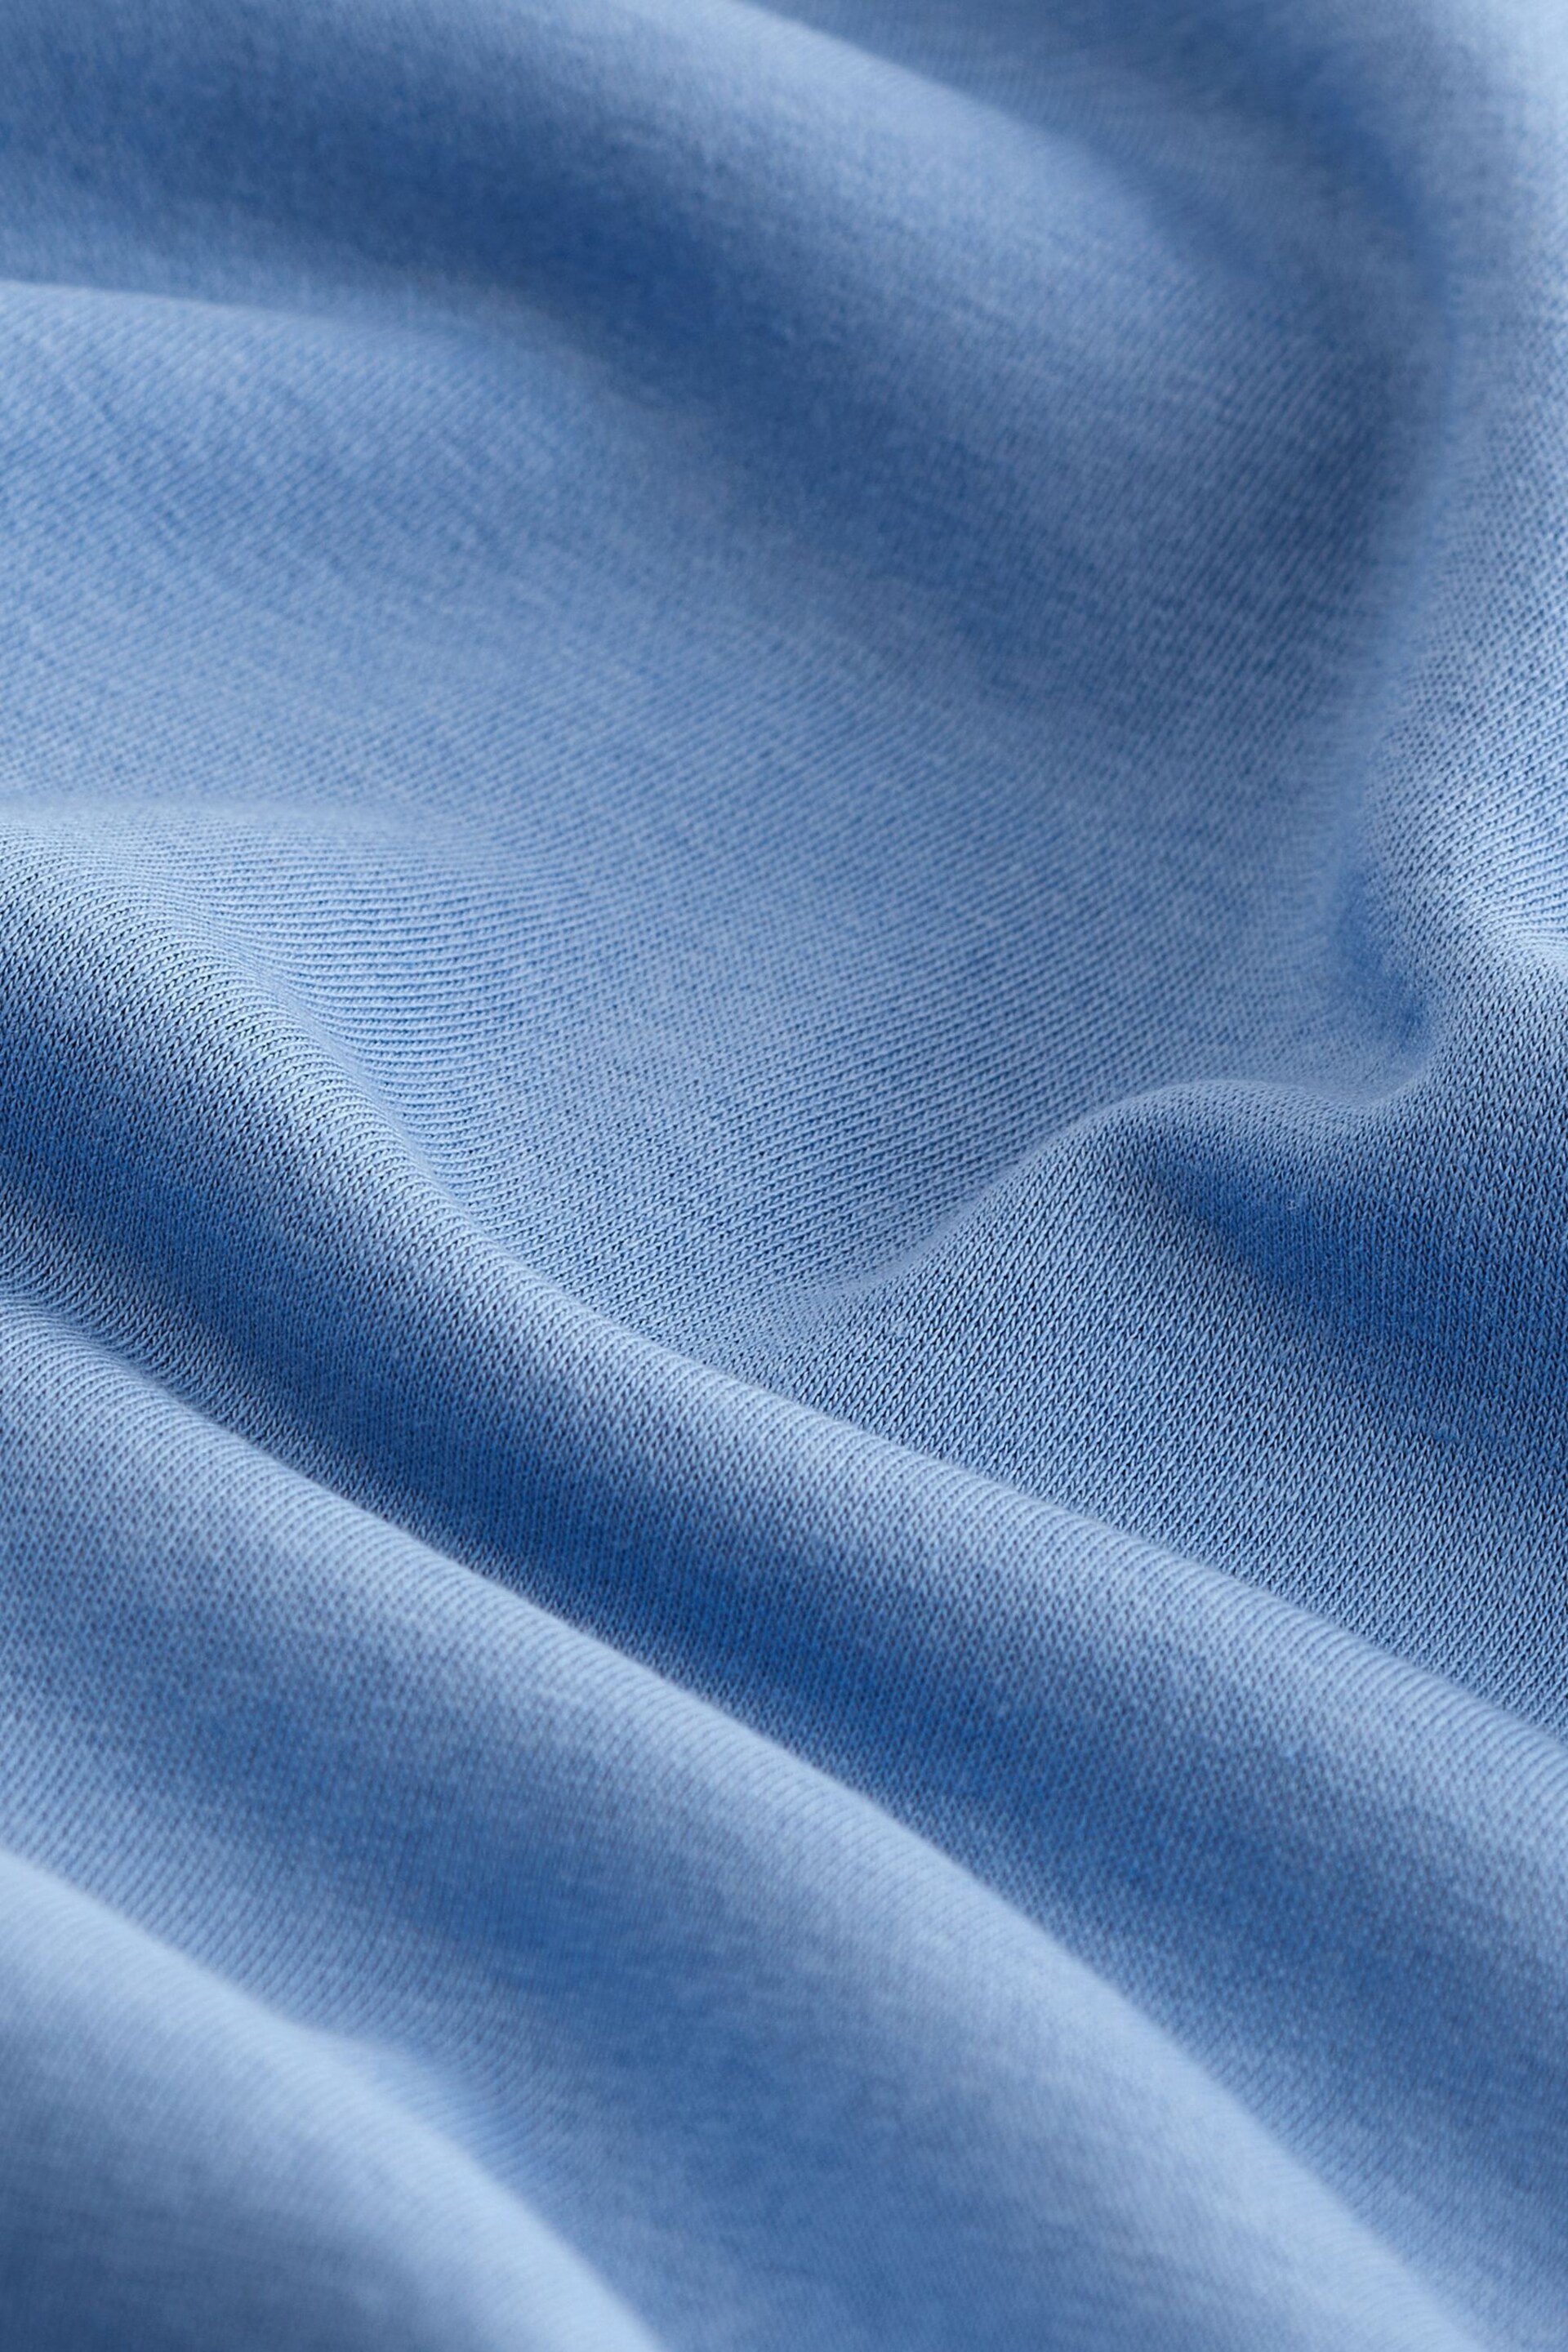 self. Blue Sweater - Image 7 of 8